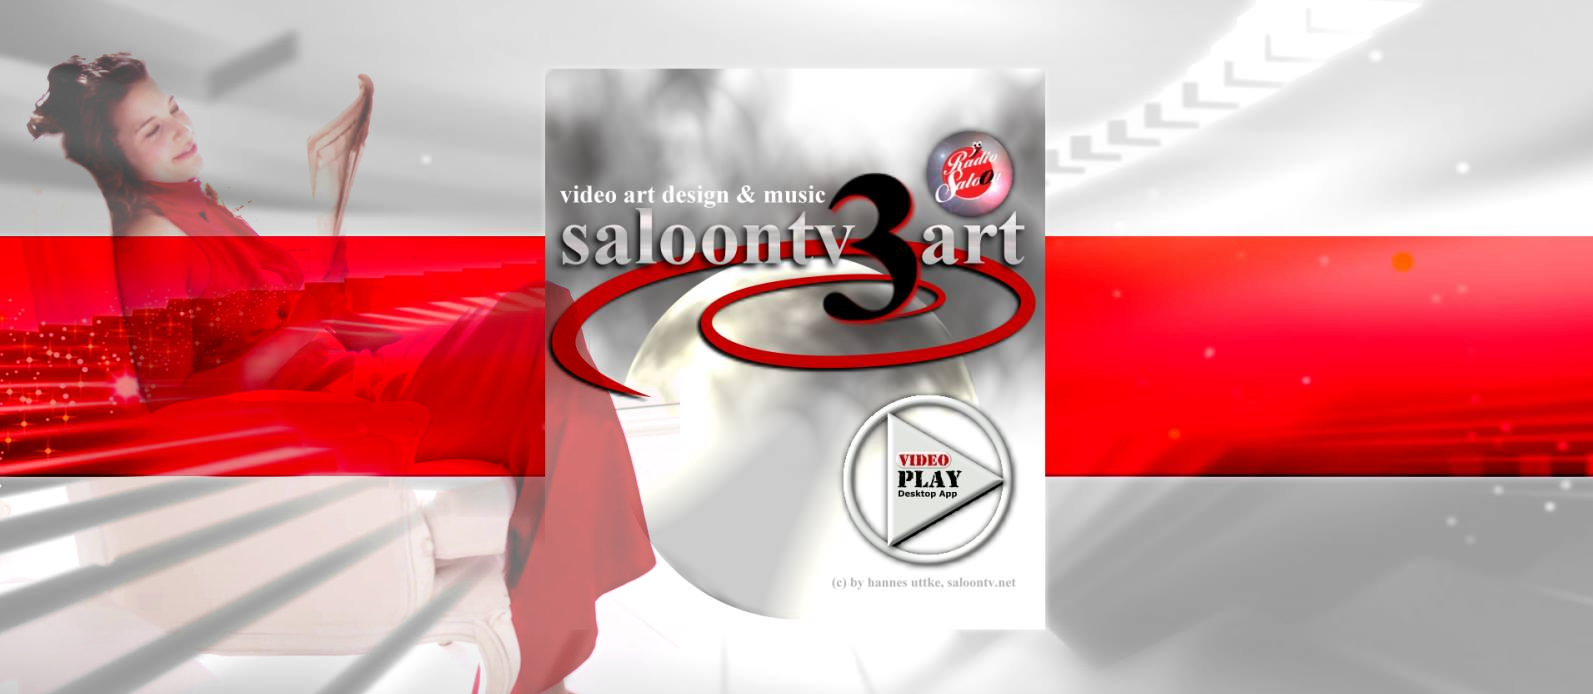 Start SaloonTV3 Video Art Design & Music WebTV Channel by TVSALOON.COM >>>